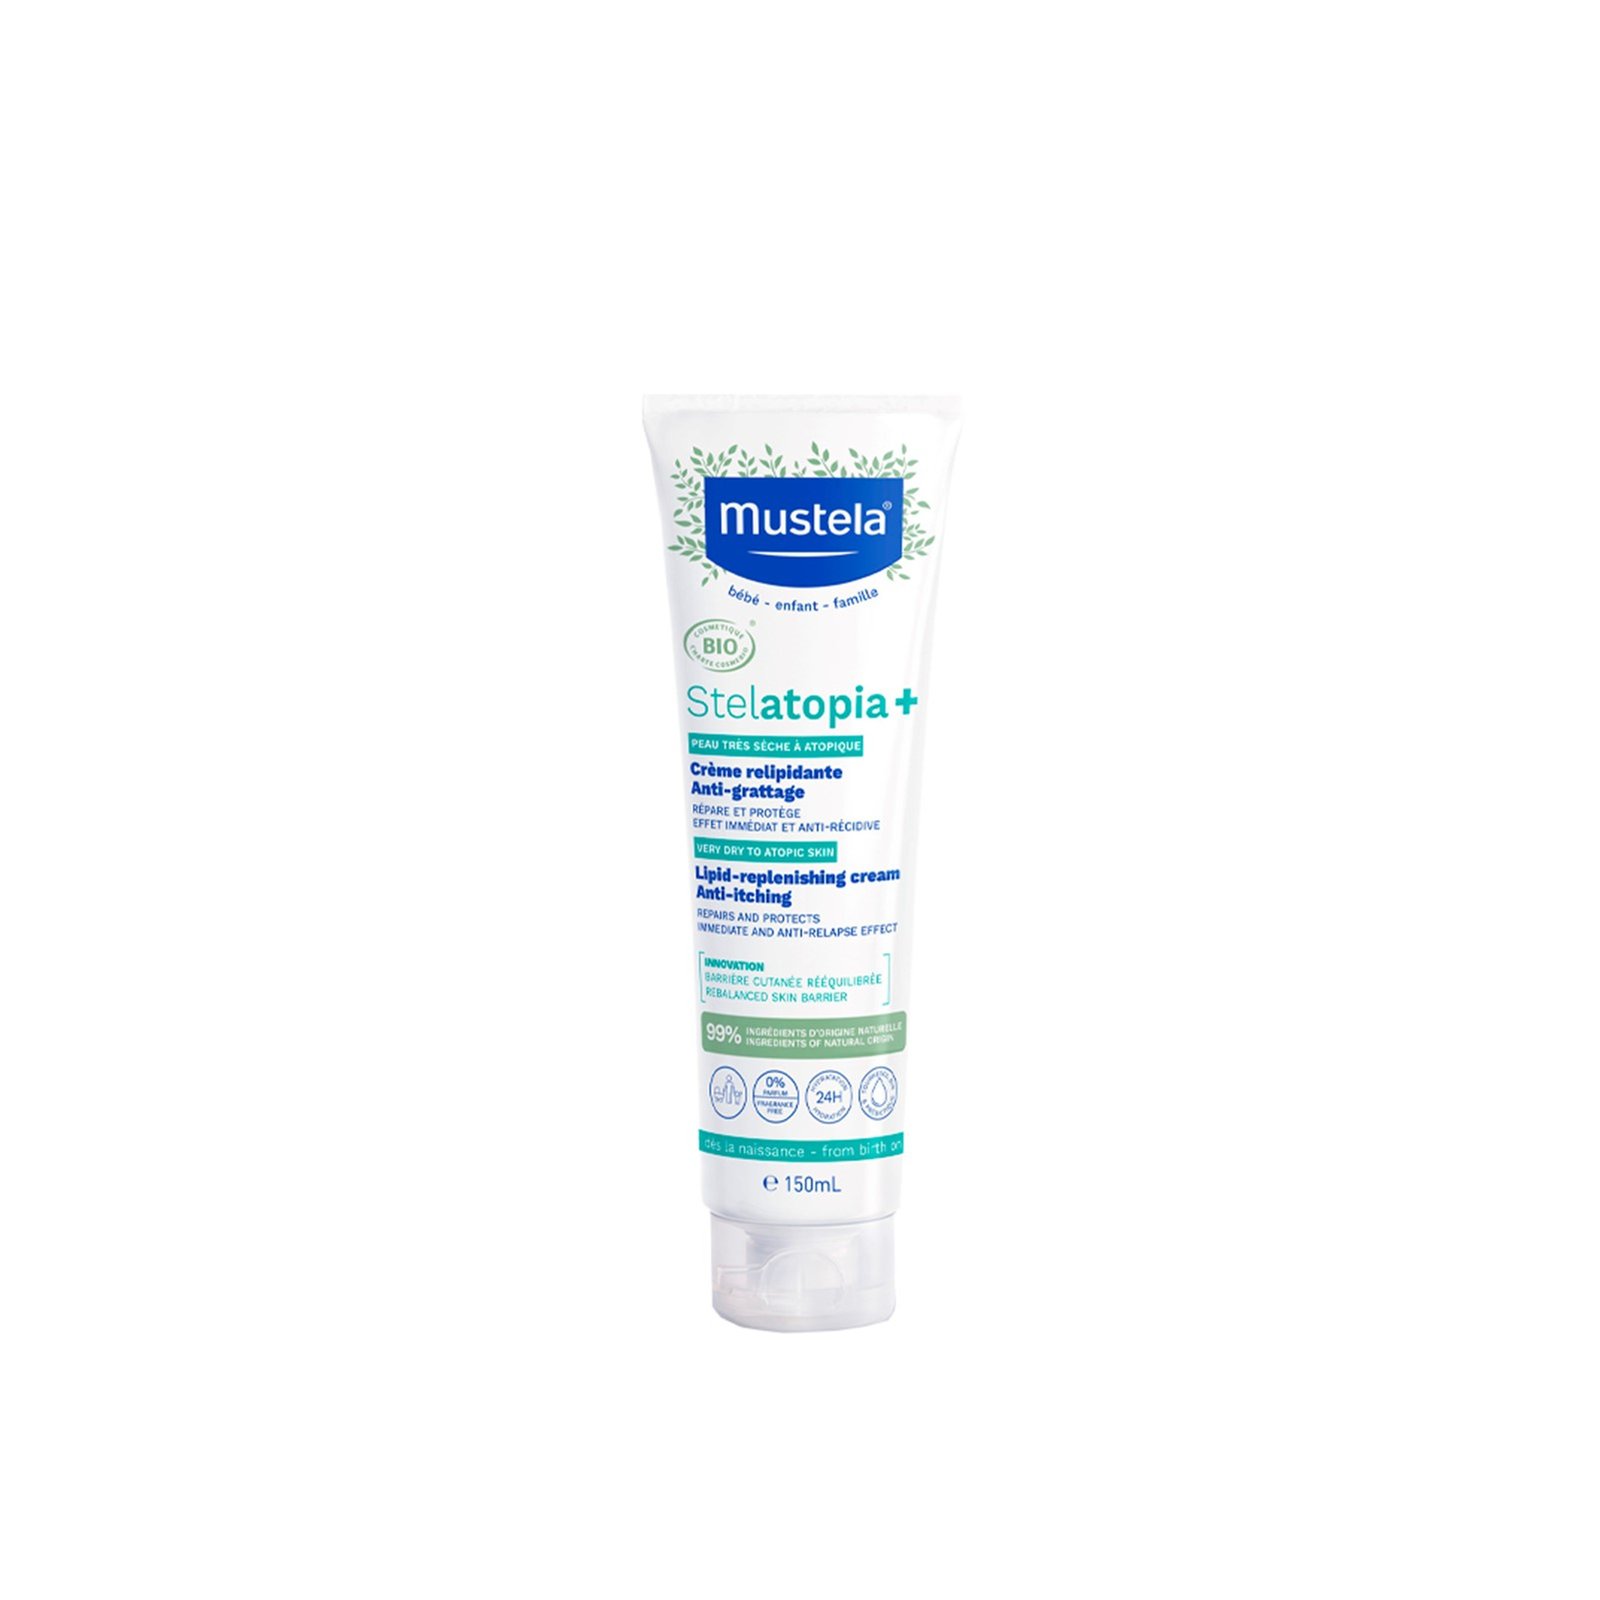 Mustela Stelatopia+ Lipid-Replenishing Cream 150ml (5 fl oz)